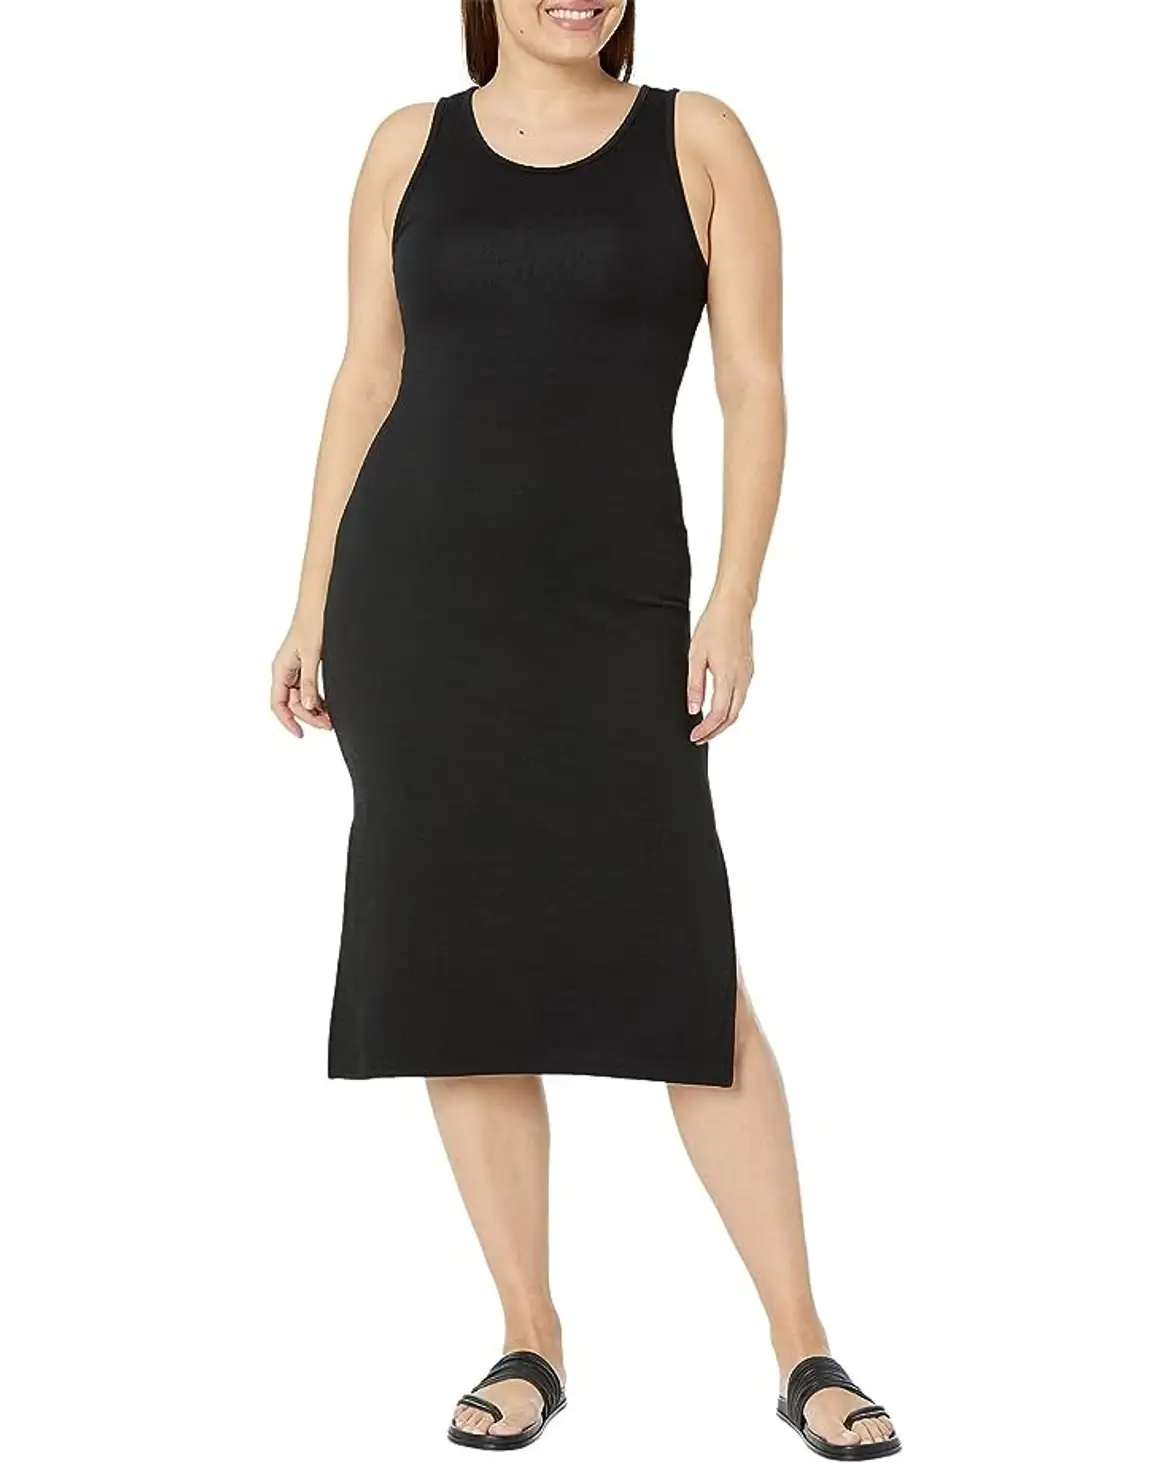 Roxy Good Keepsake Strappy Midi Dress for Women in Black